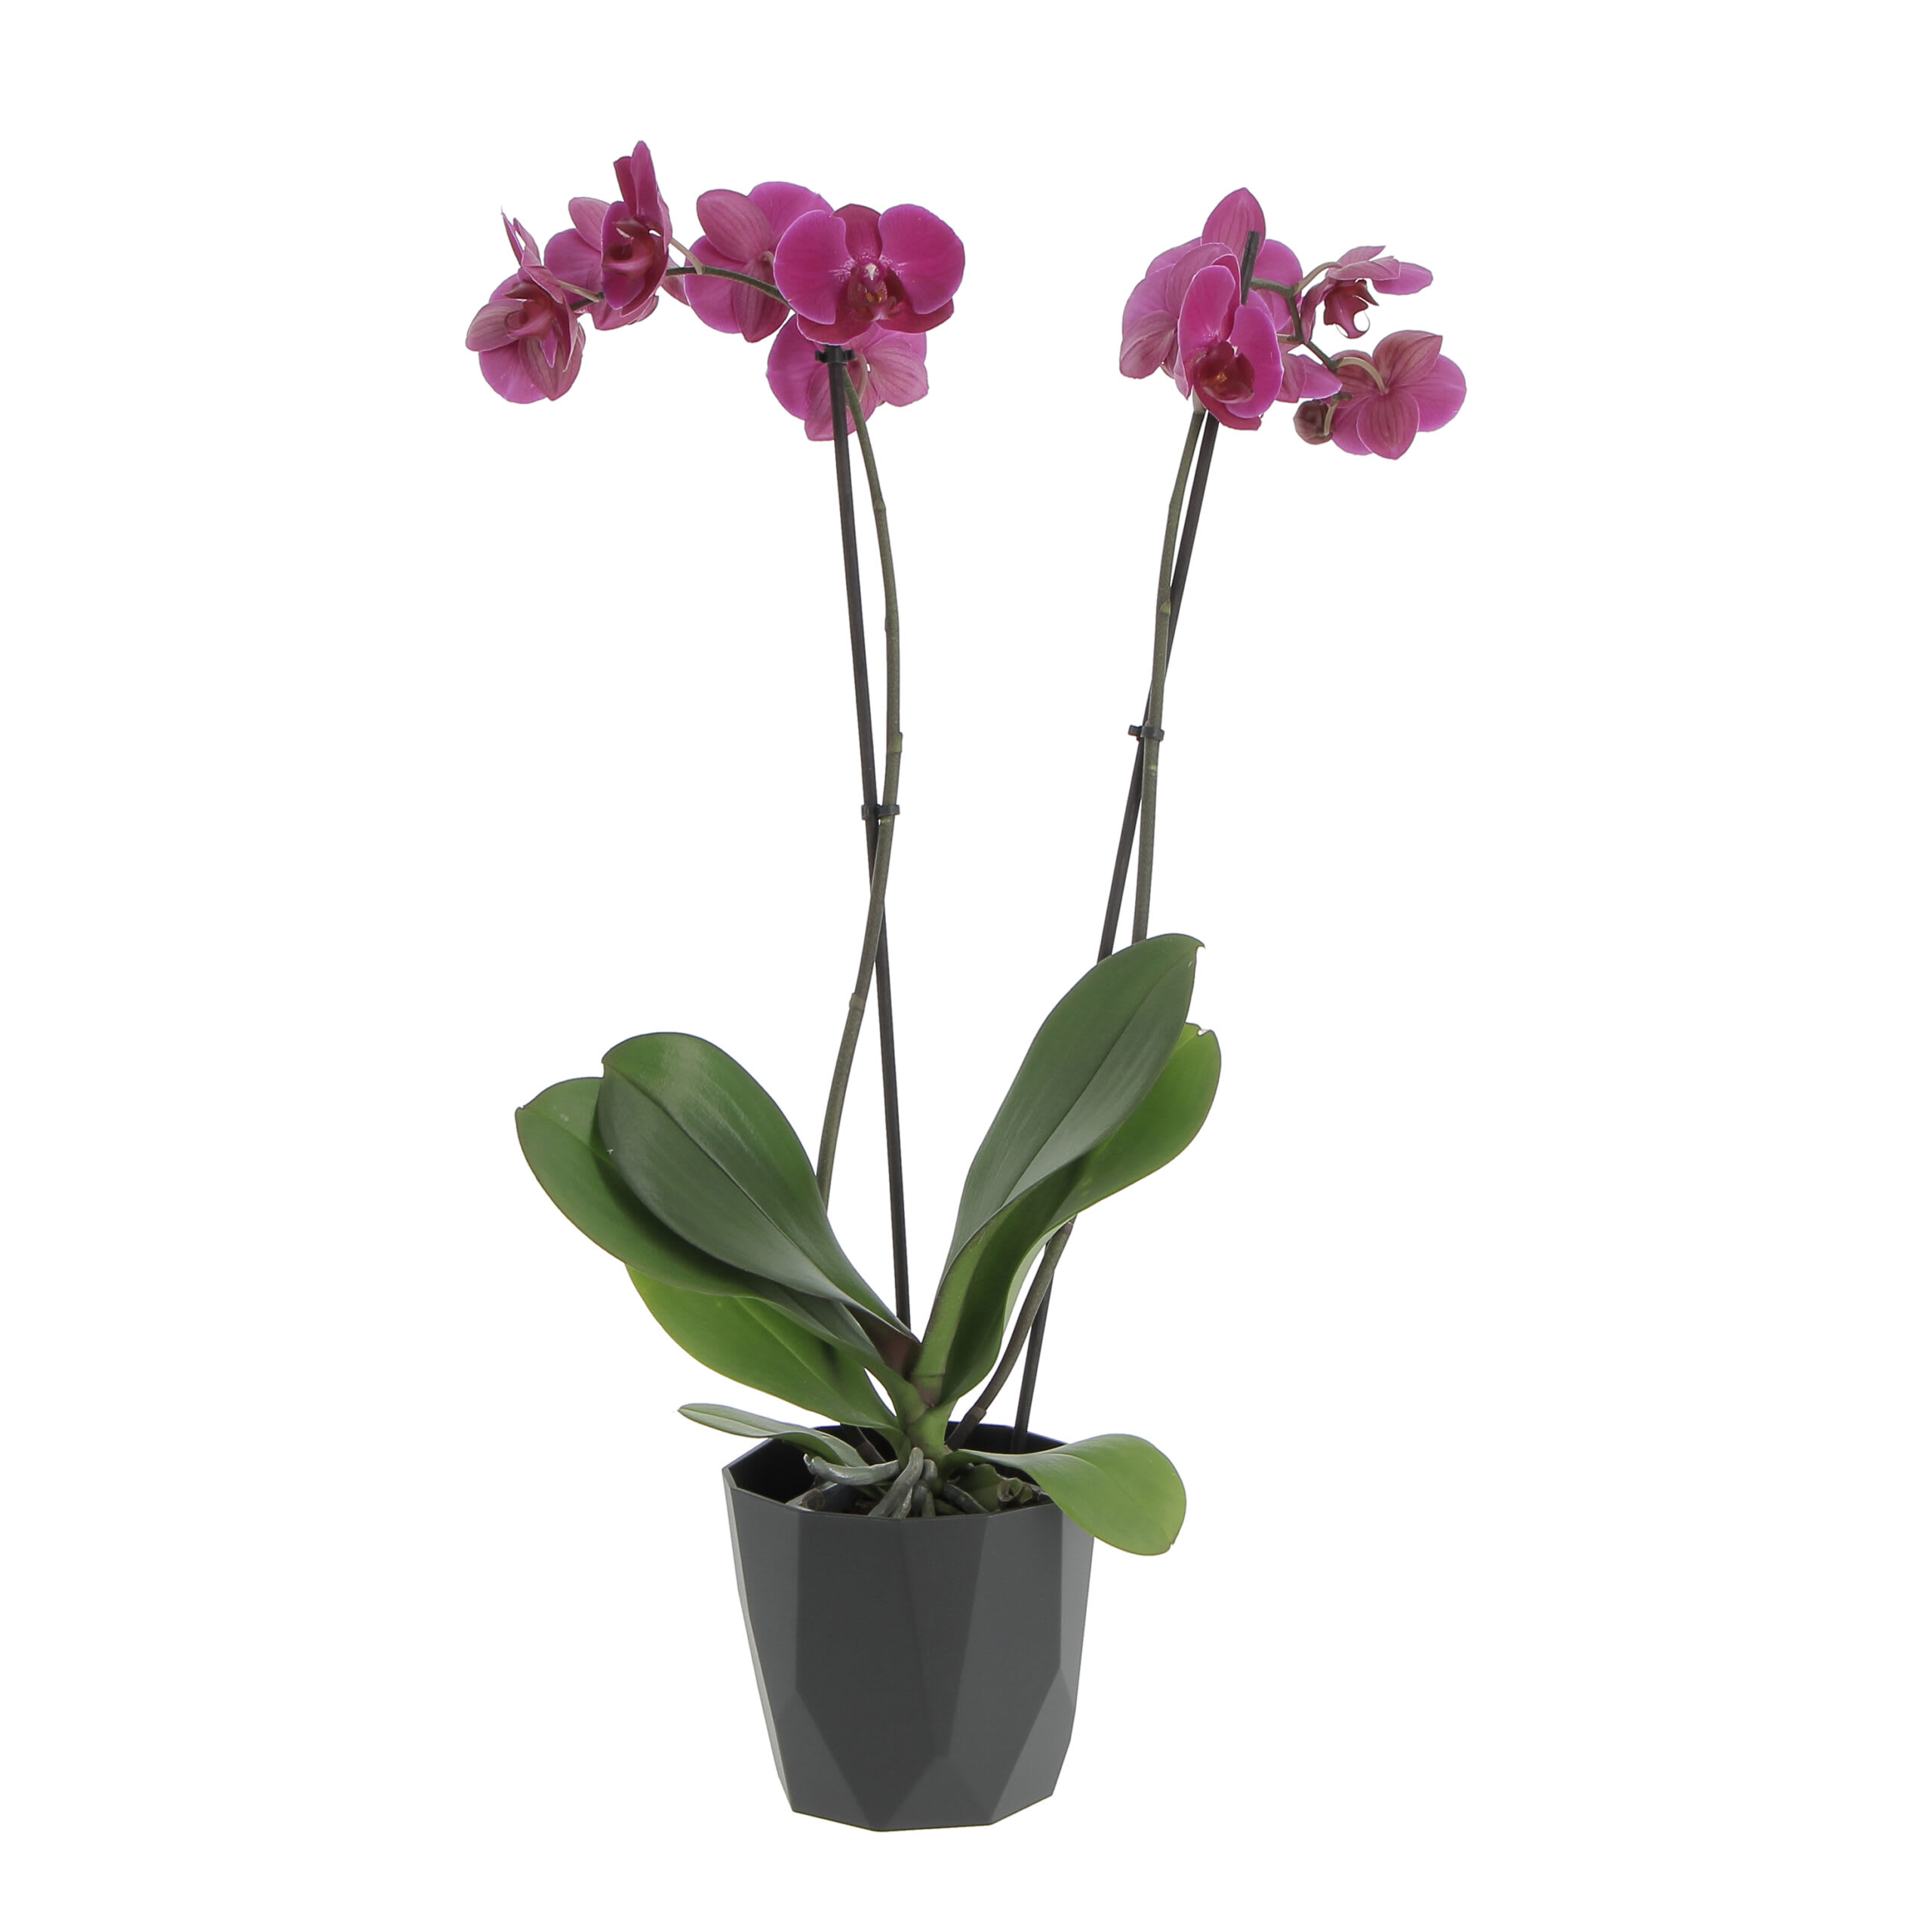 https://medias.maisonsdumonde.com/images/f_auto,q_auto/v1/mkp/M22175766_1/orchidea-phalaenopsis-fucsia-pianta-vera-h-60-70-cm-vaso-oe-12-cm.jpg